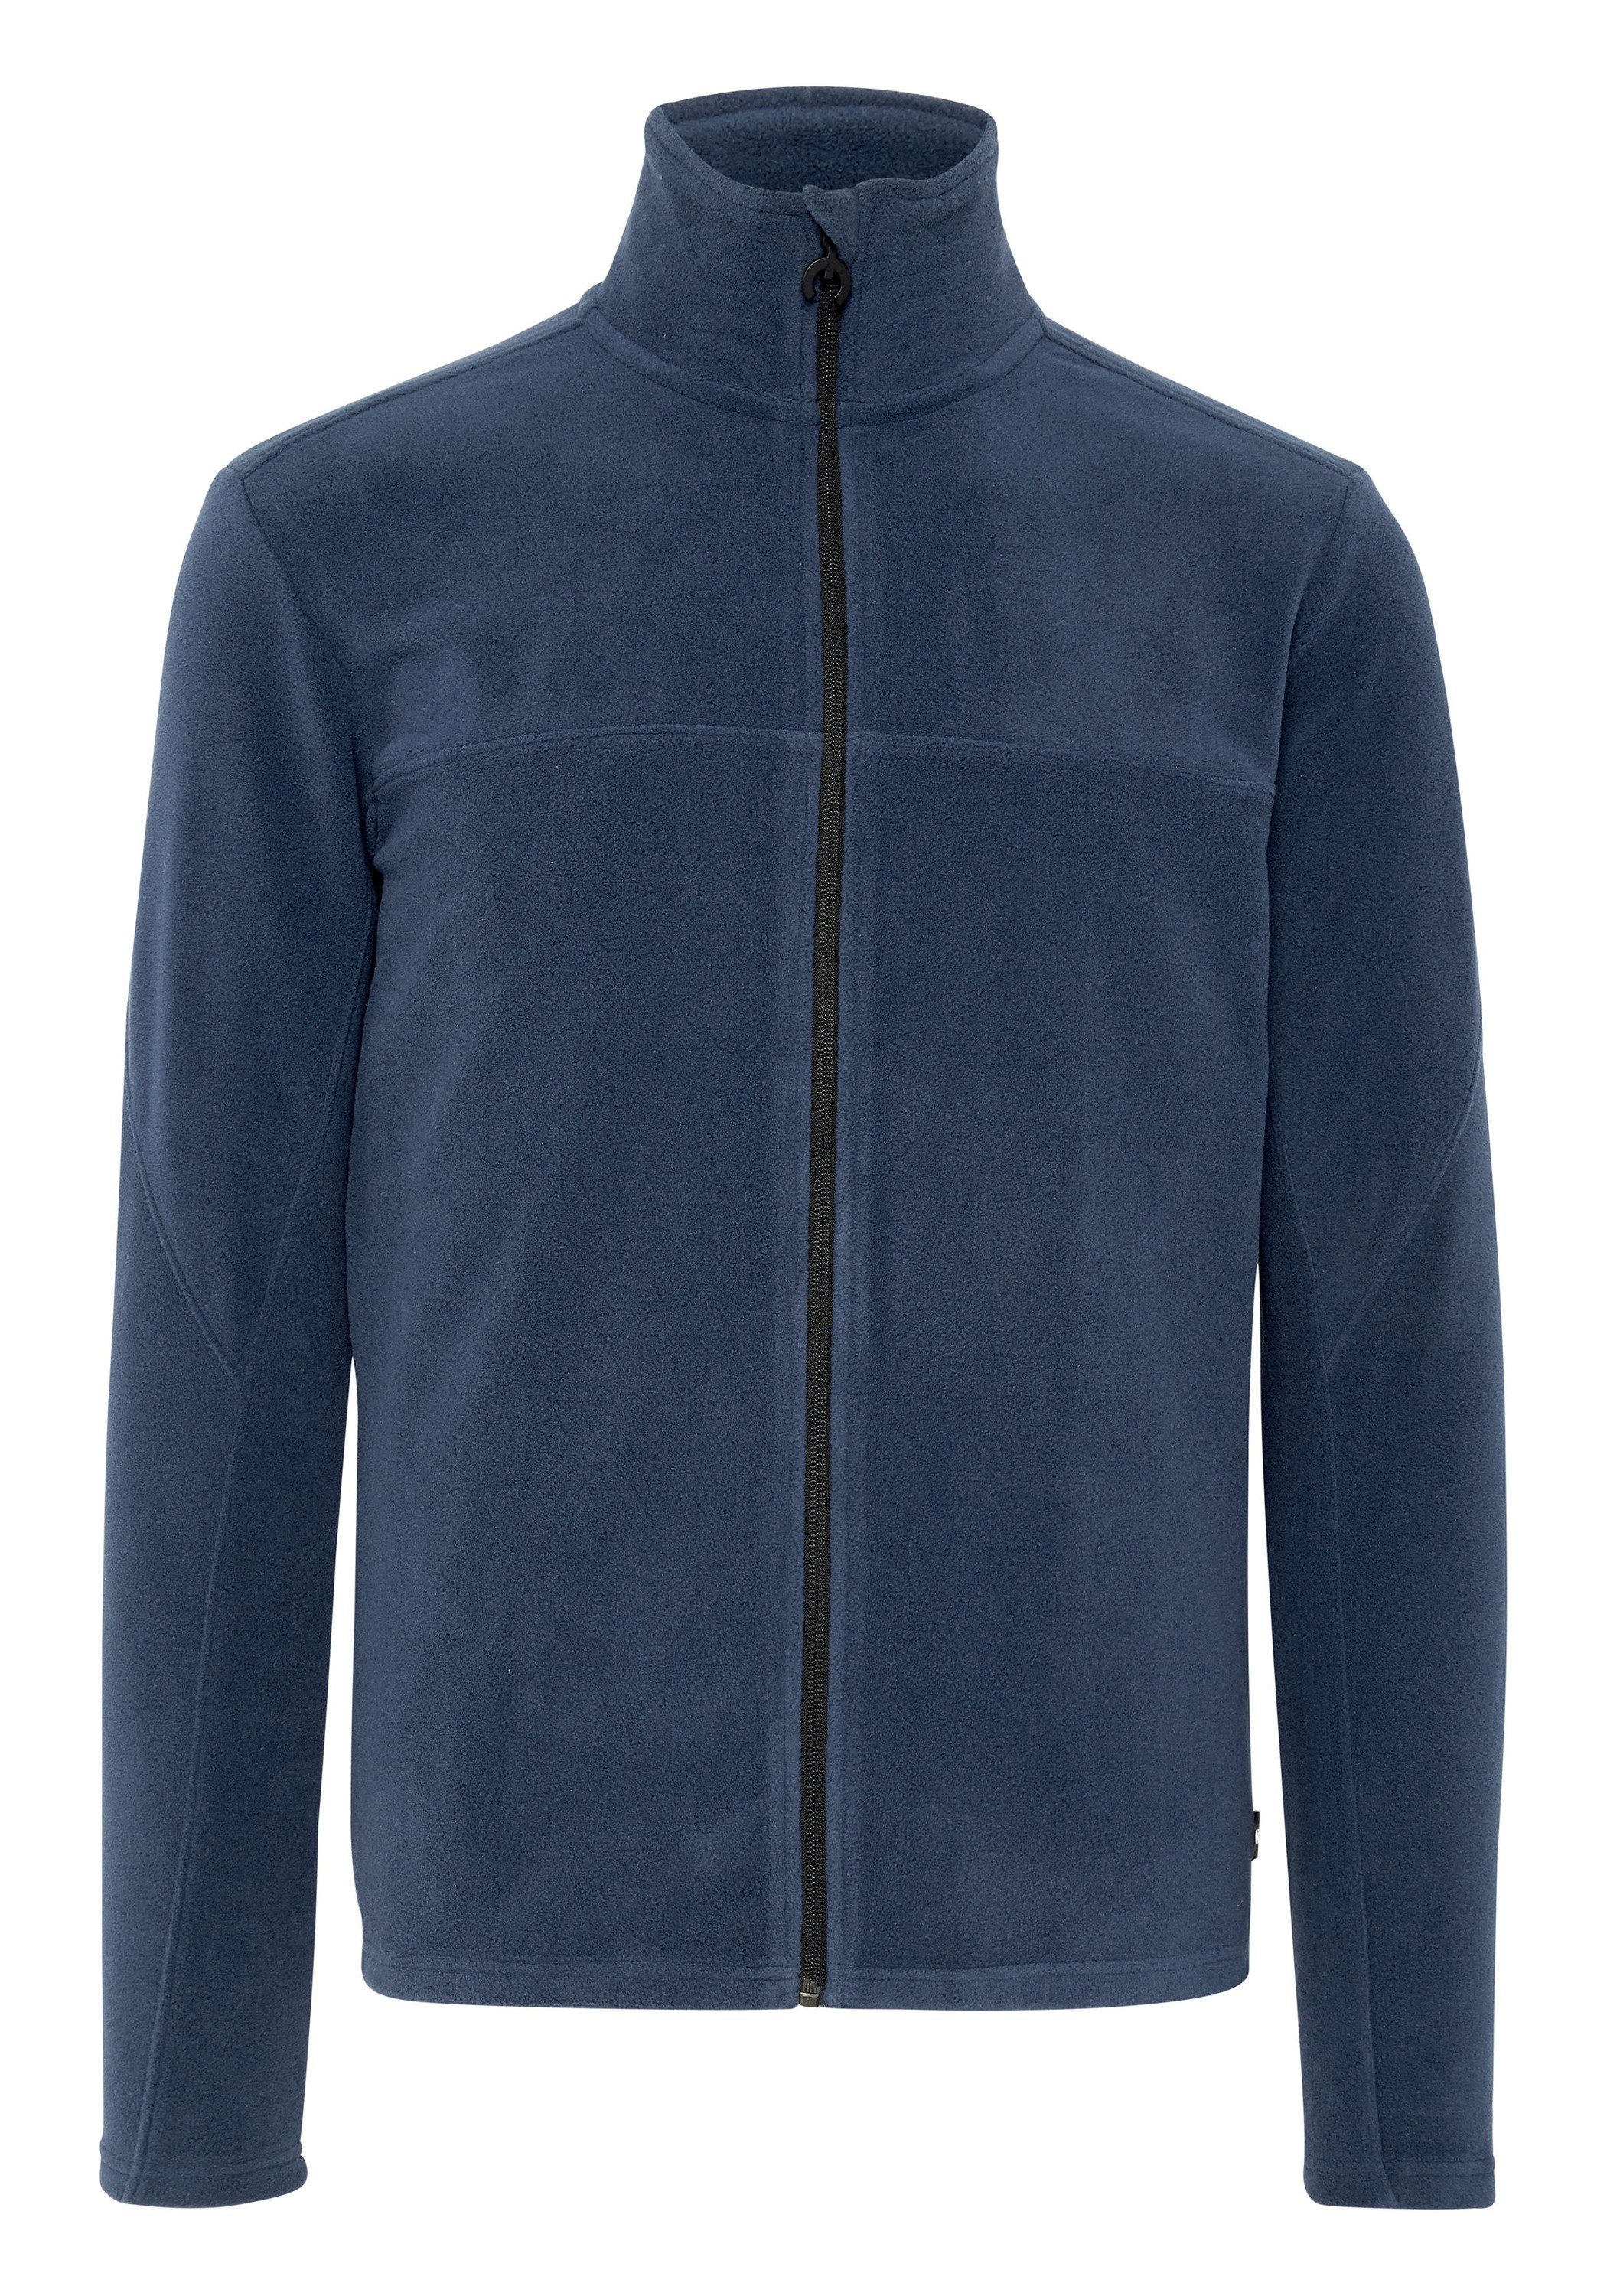 Beliebt 100 % Chiemsee Fleecejacke Fleece-Jacke im mit Jumper-Motiv Basic-Stil dunkel 1 blau